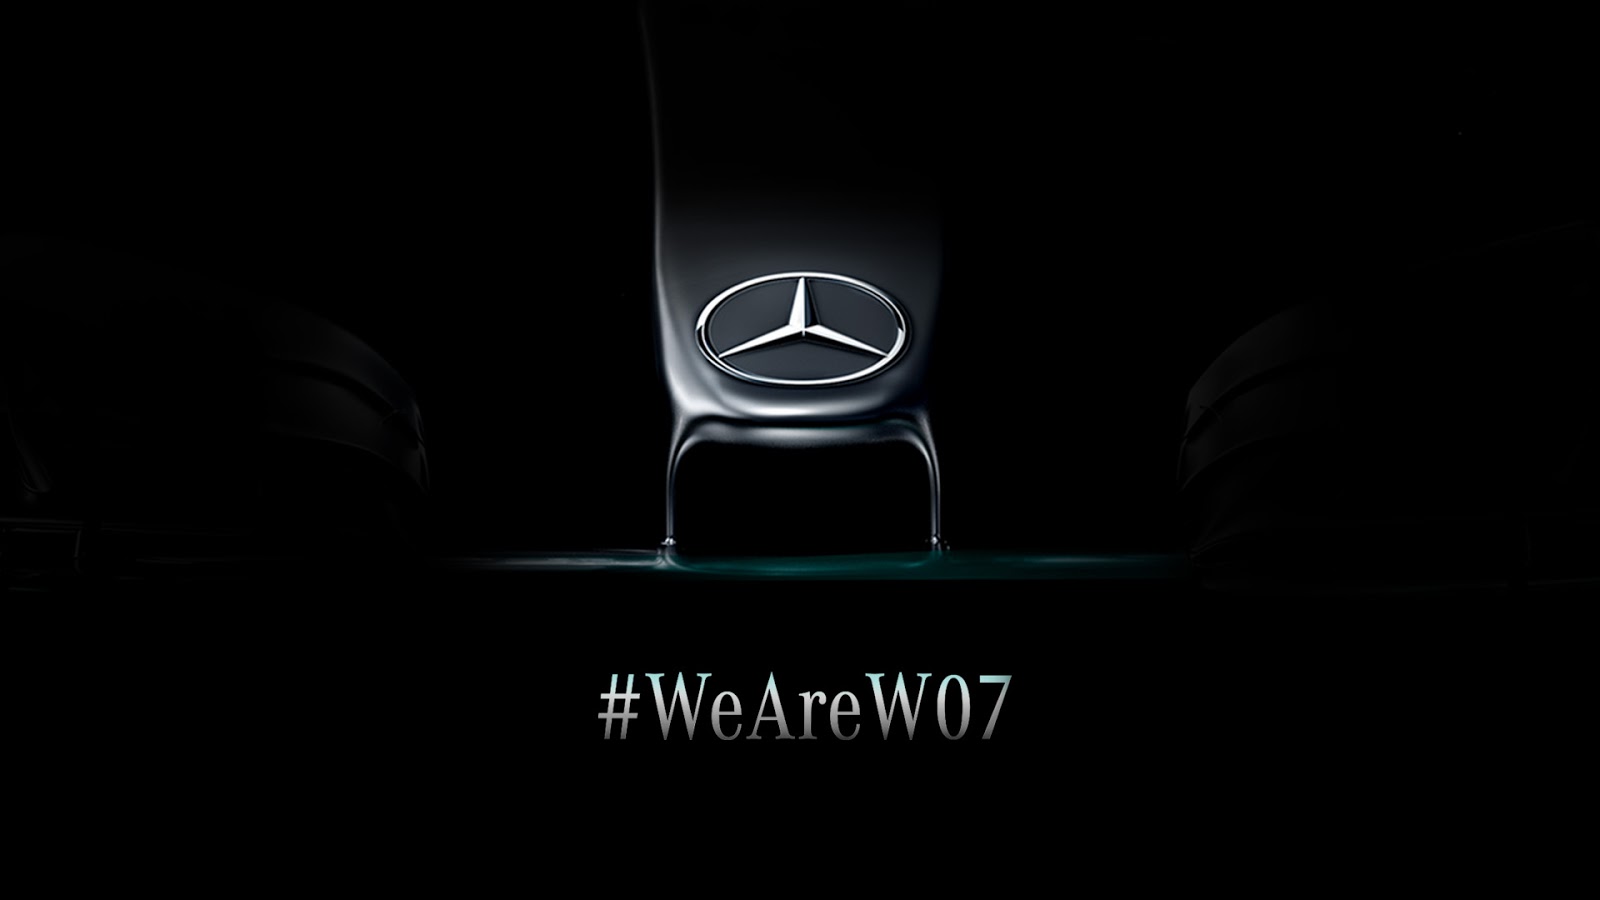 Mercedes AMG Petronas W07 2016 F1 Wallpaper KFZoom